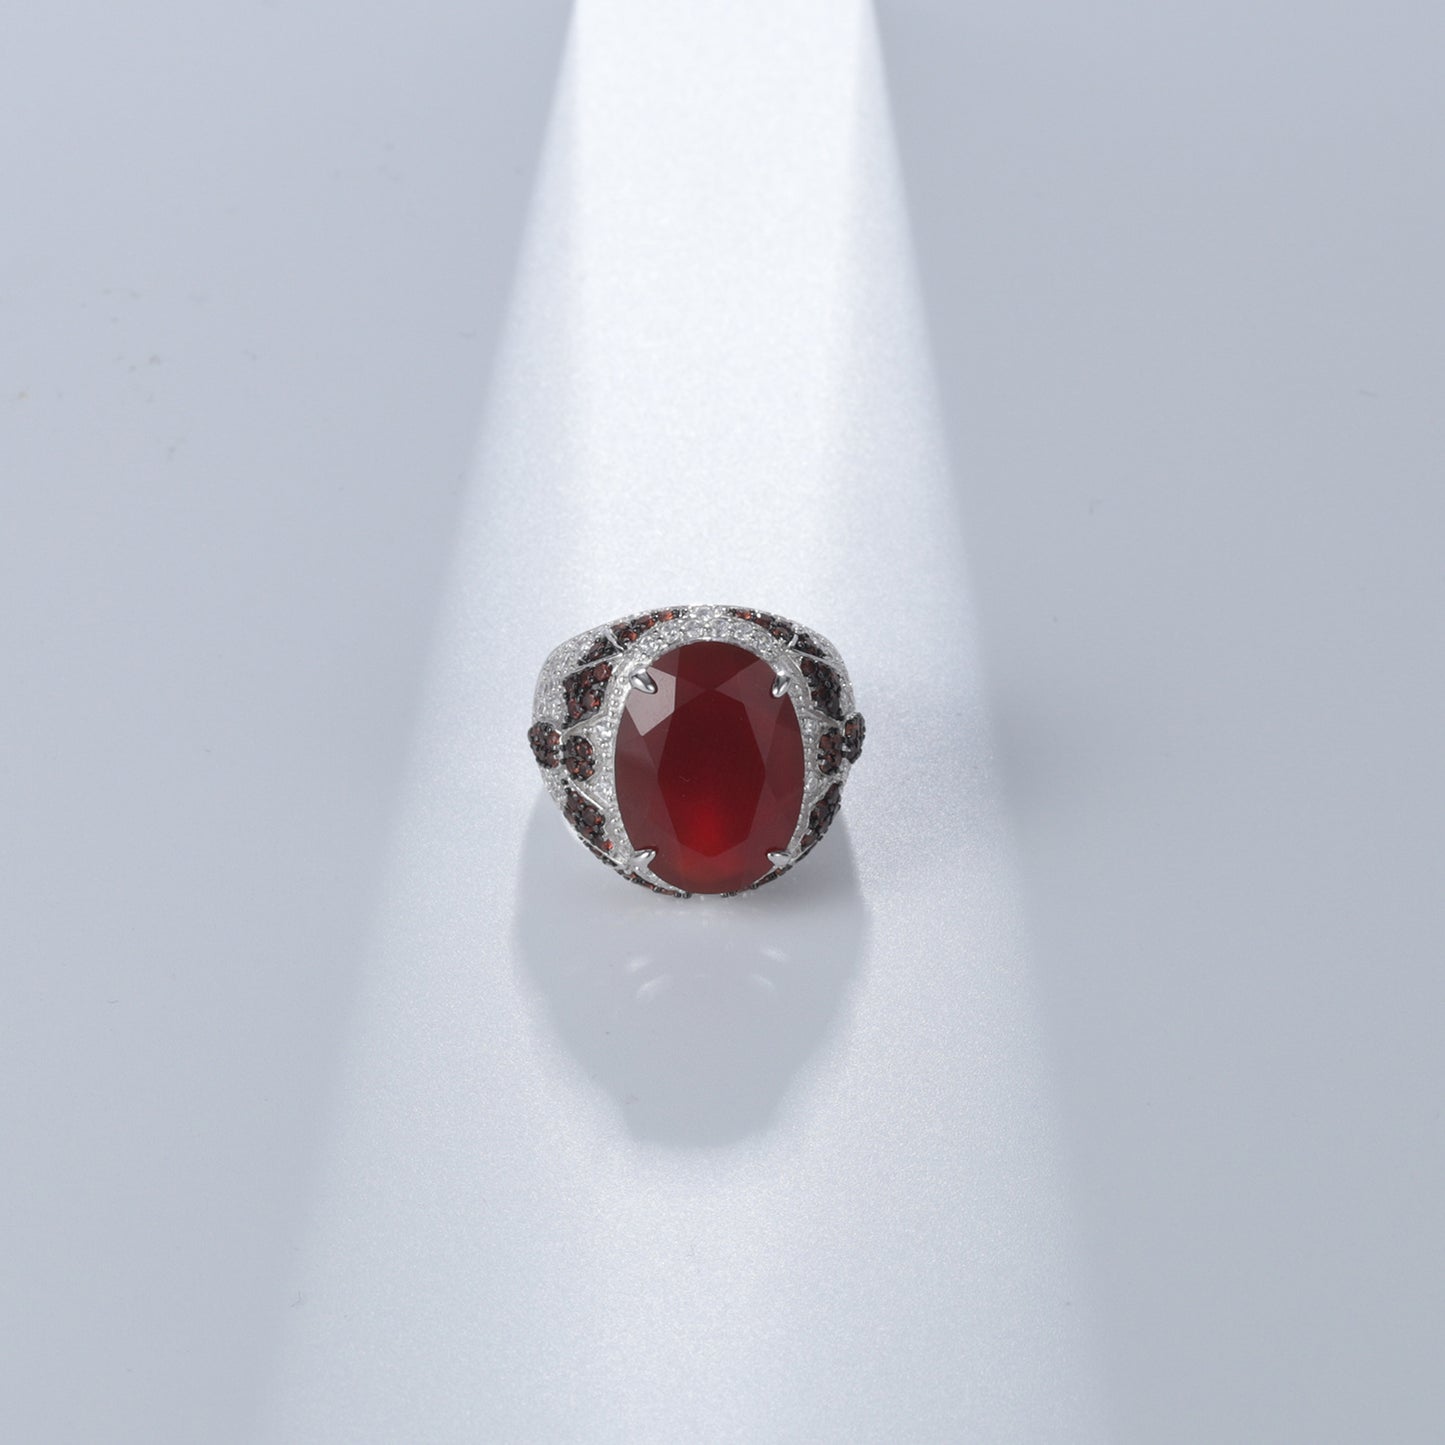 Designer Luxury Red Agate Ring